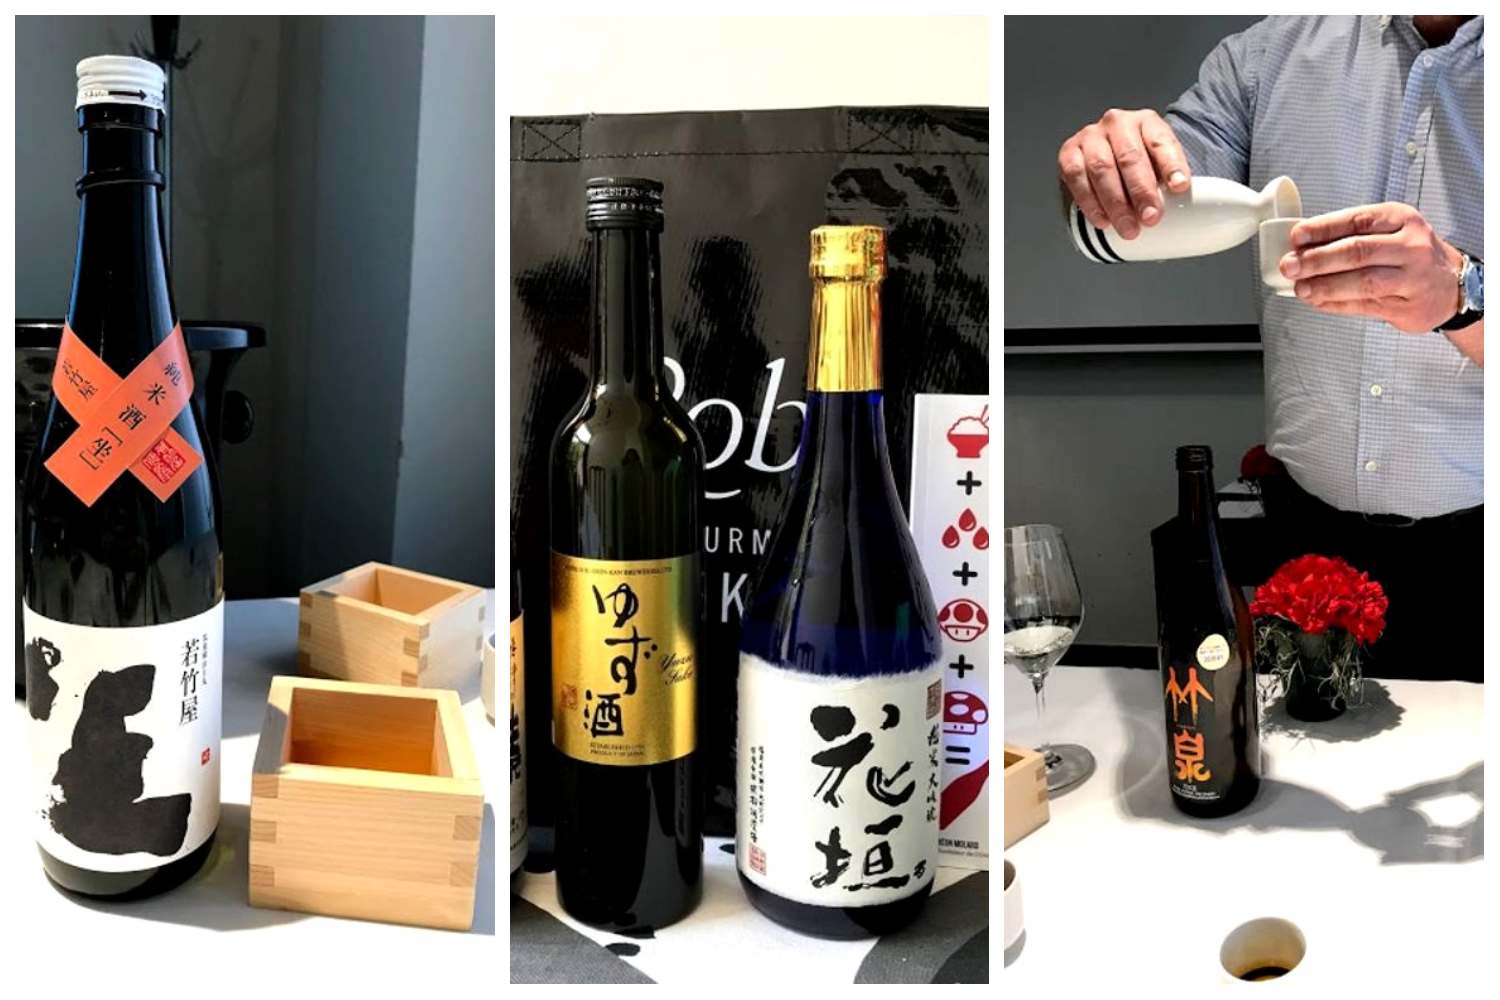 MISEN GINJYO Saké japonais 15,4% 72cl pas cher 